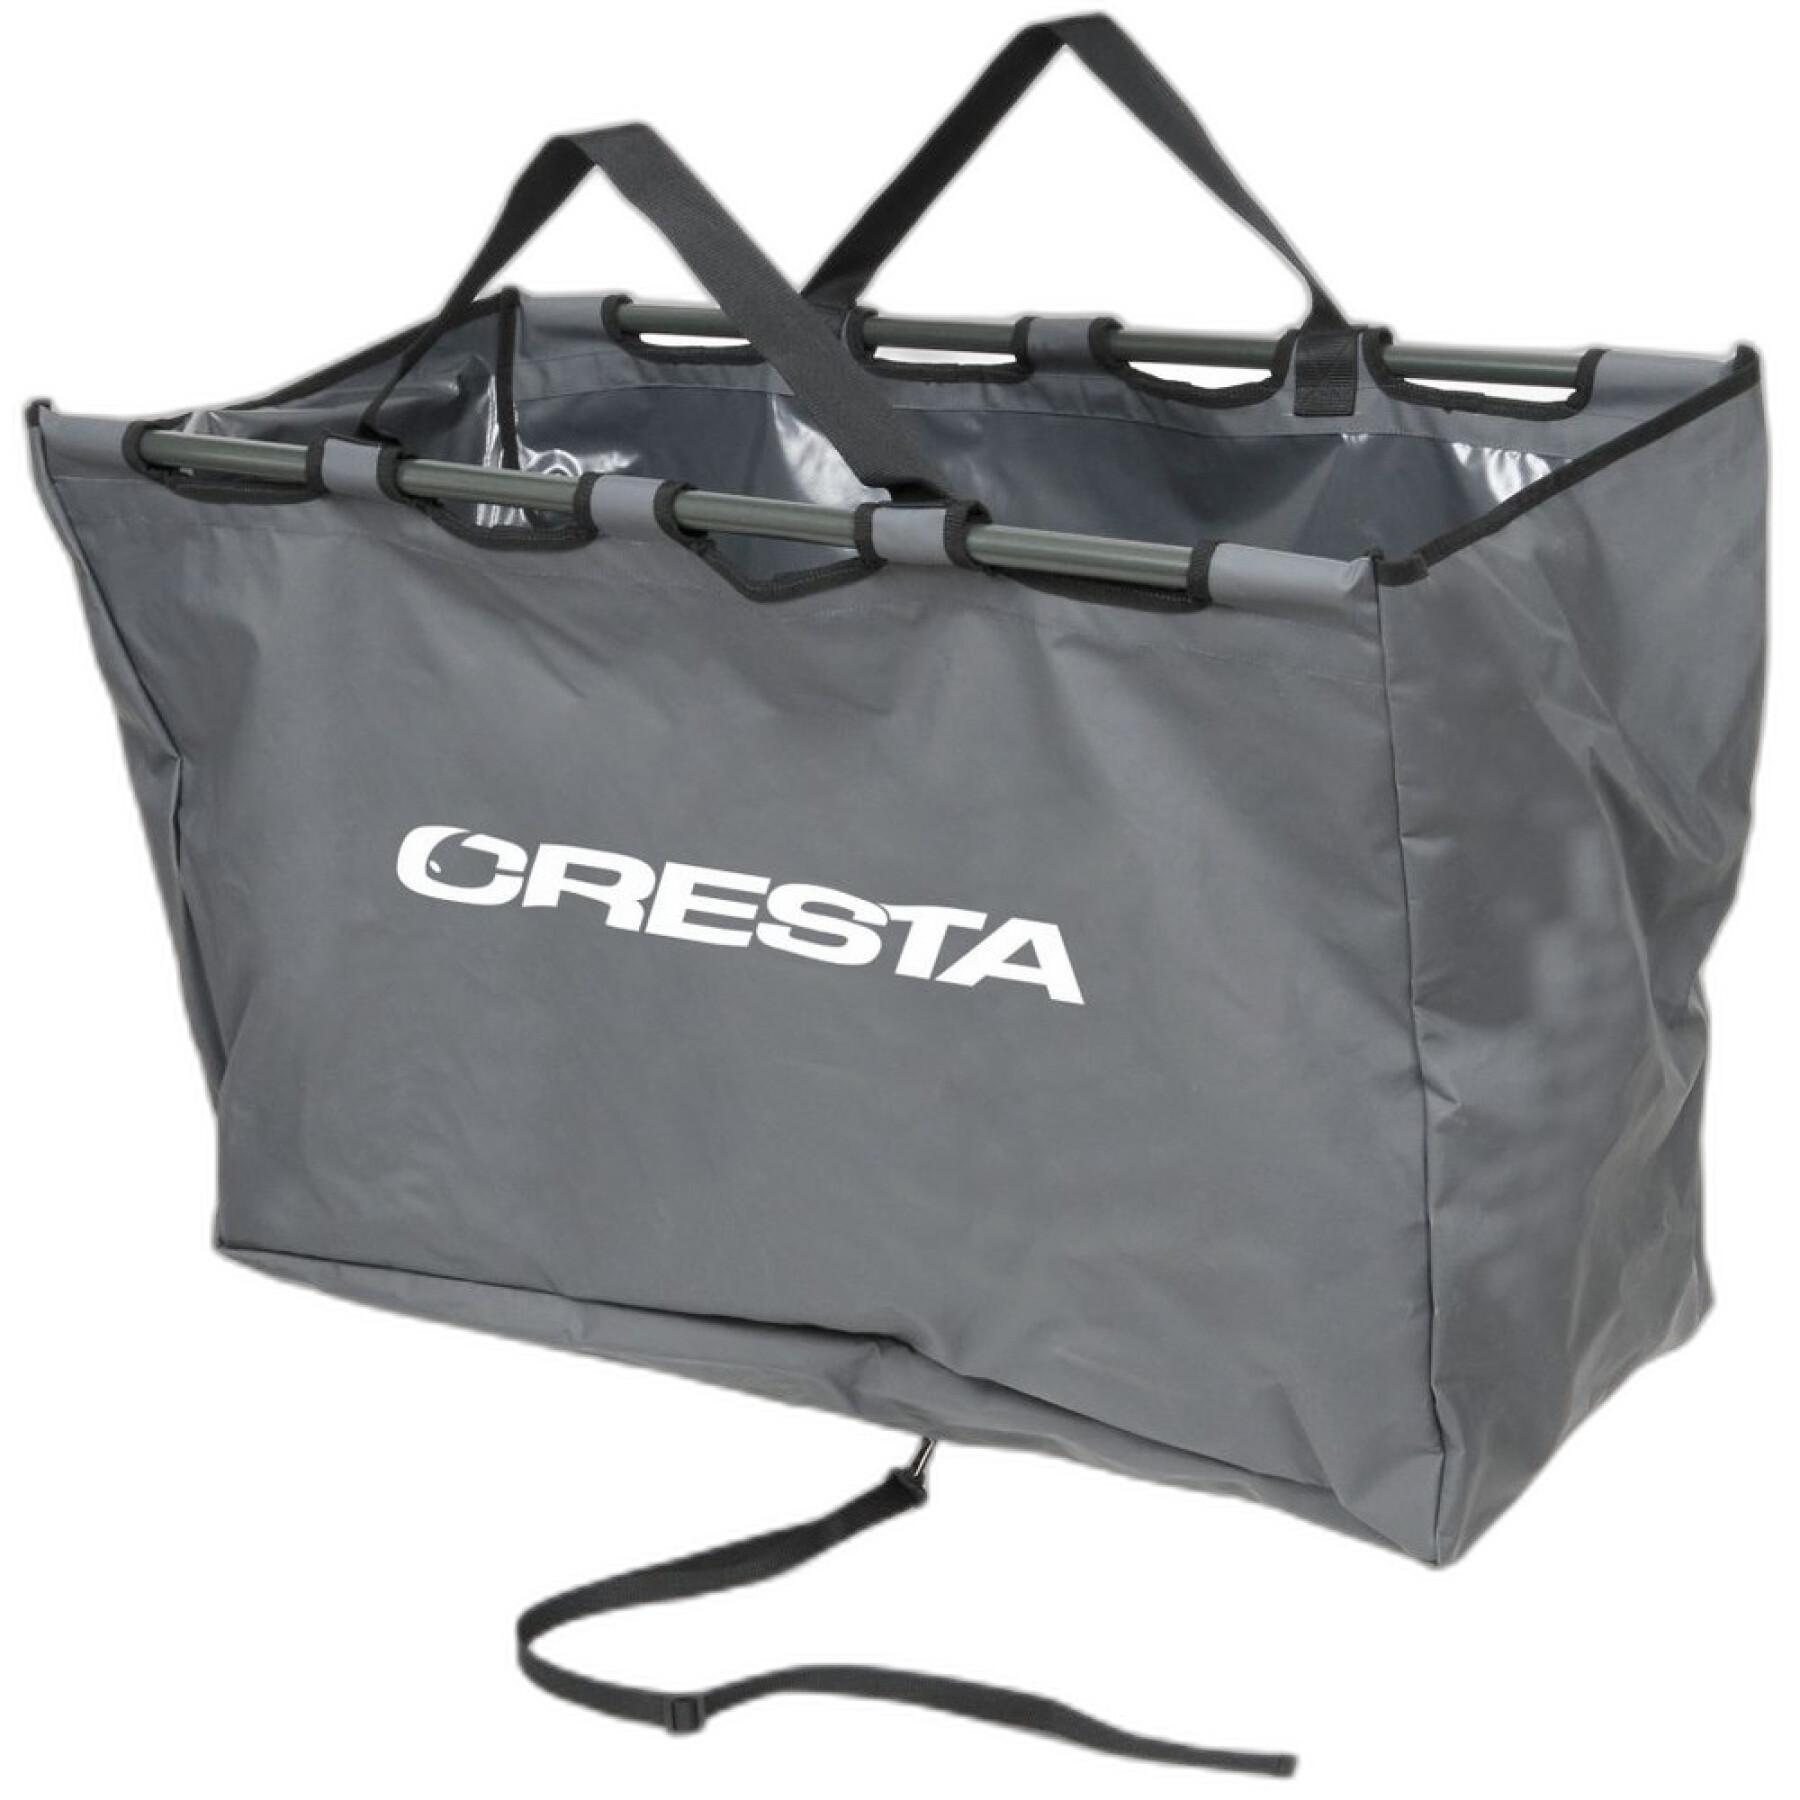 Weighing bag Cresta heavy duty L